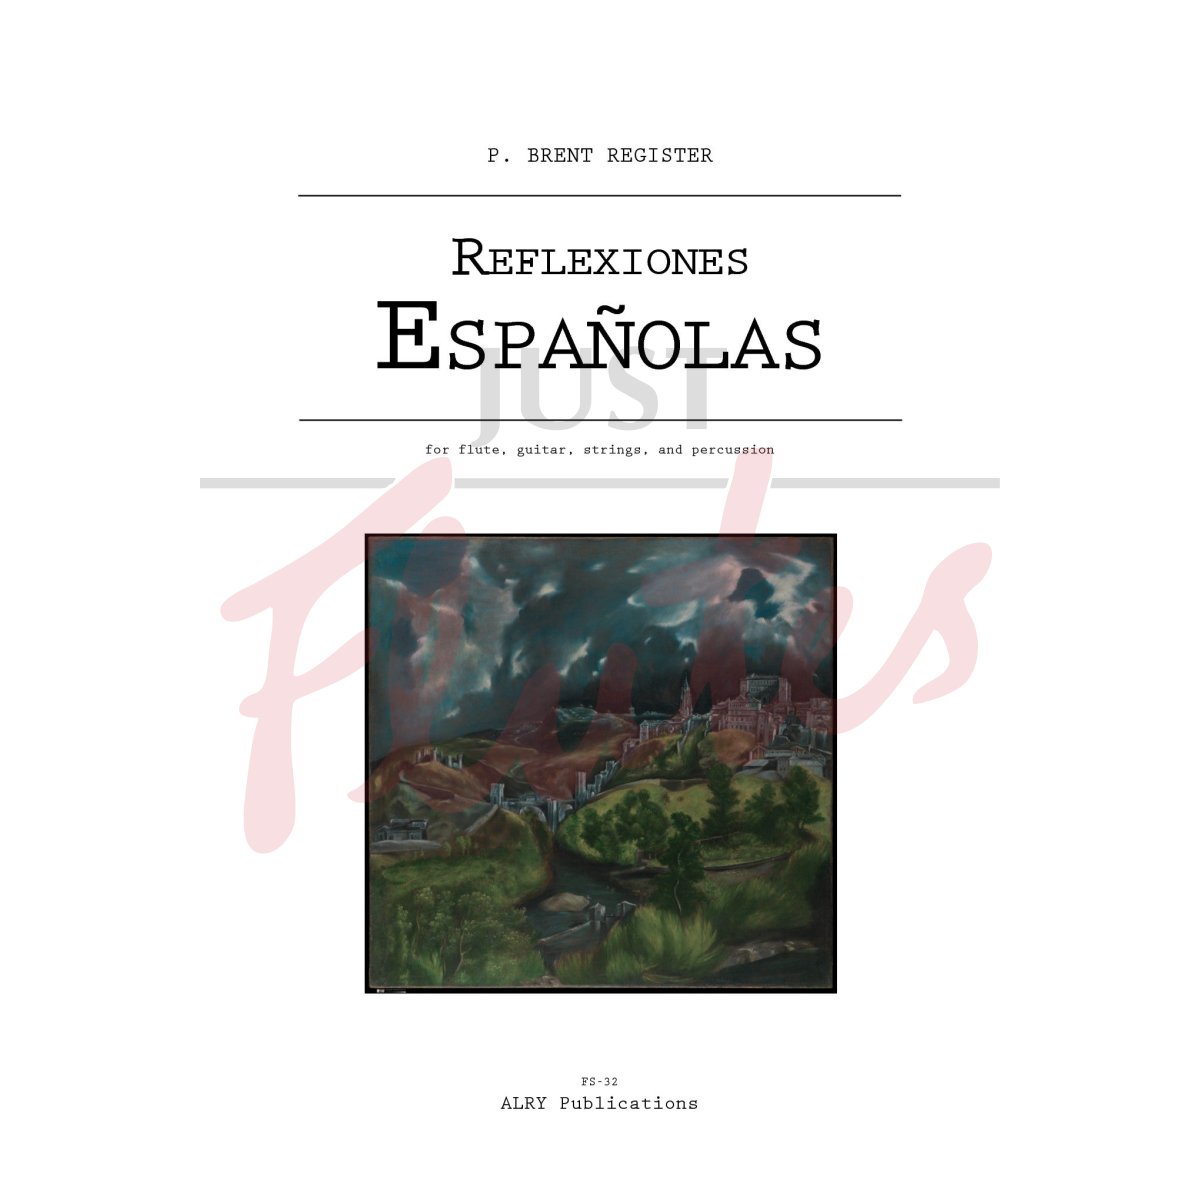 Reflexiones Espanolas for Flute, Guitar, Strings and Percussion